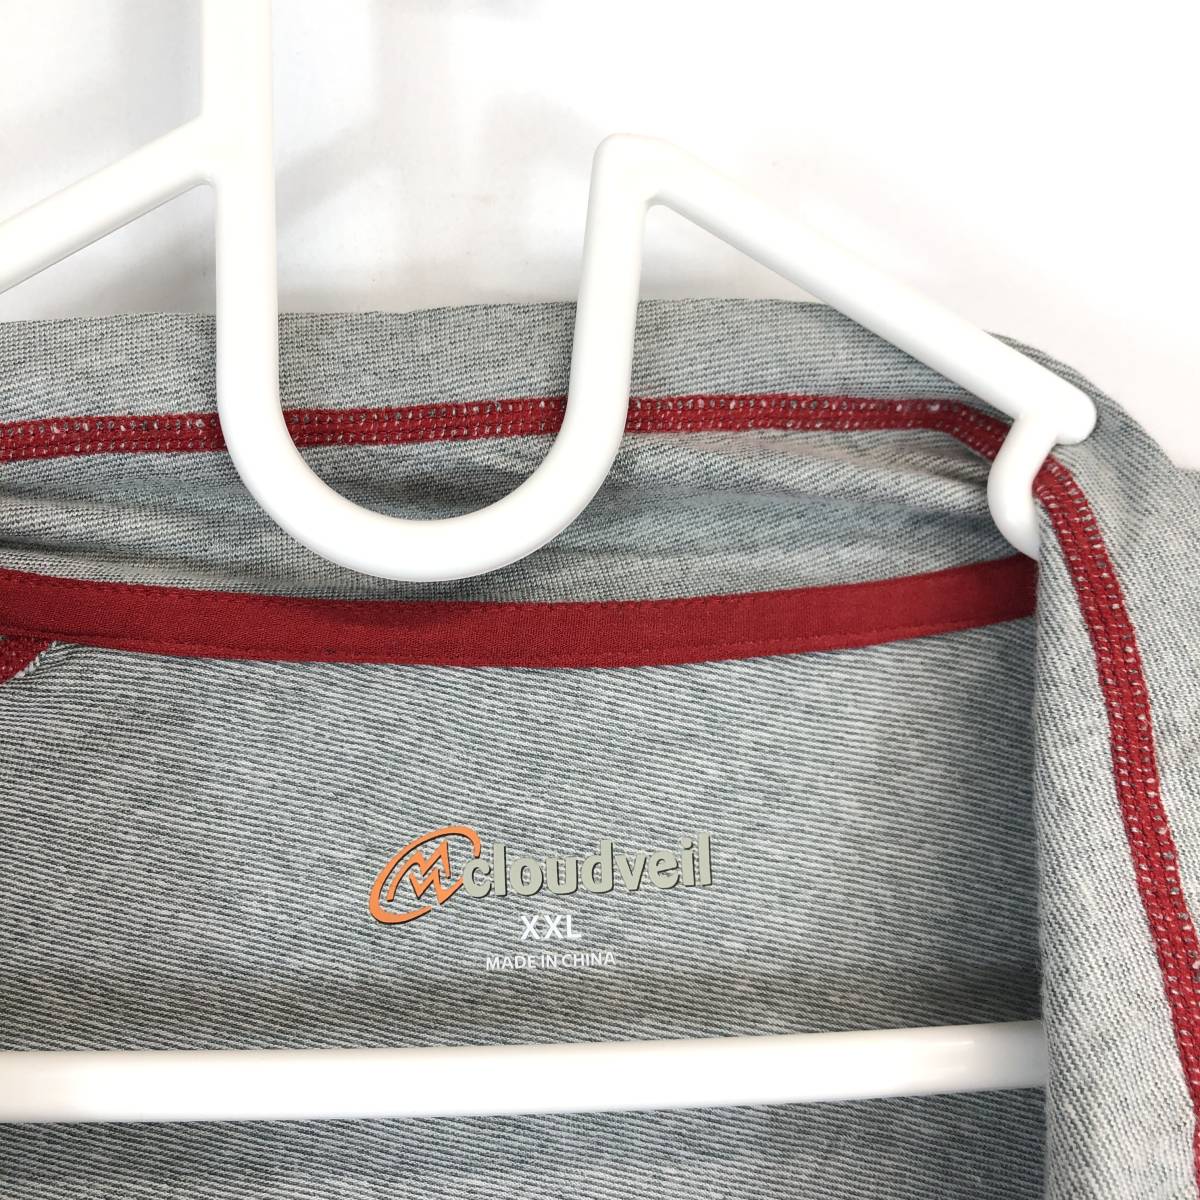  Cloudveil Cloudveil long sleeve half Zip shirt gray series XXL size cotton poly- 